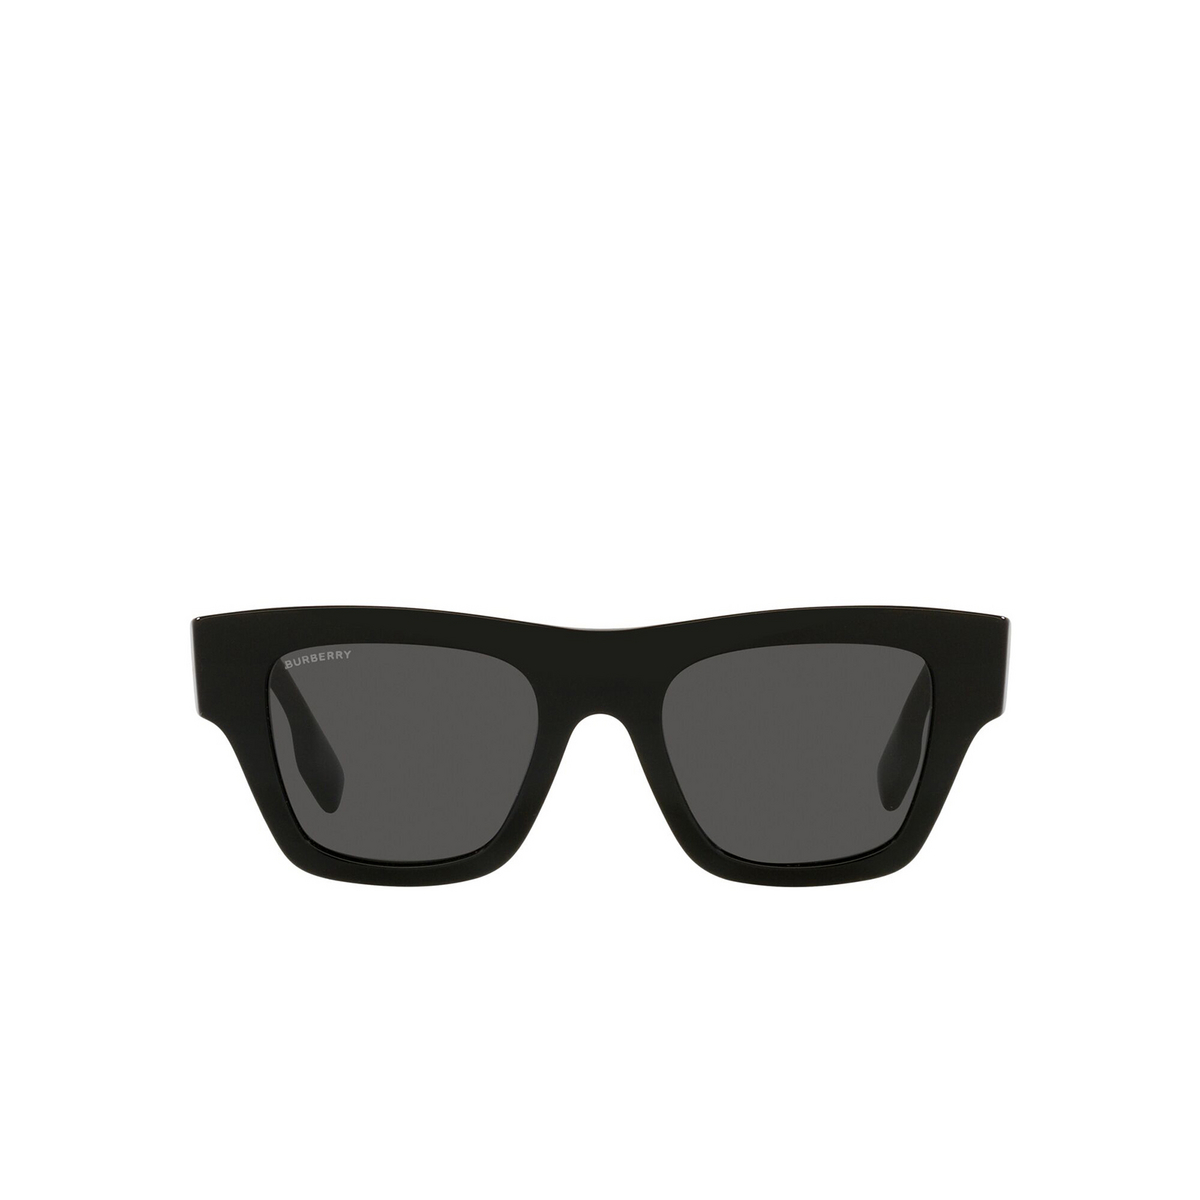 Burberry® Square Sunglasses: BE4360 Ernest color 399387 Black - front view